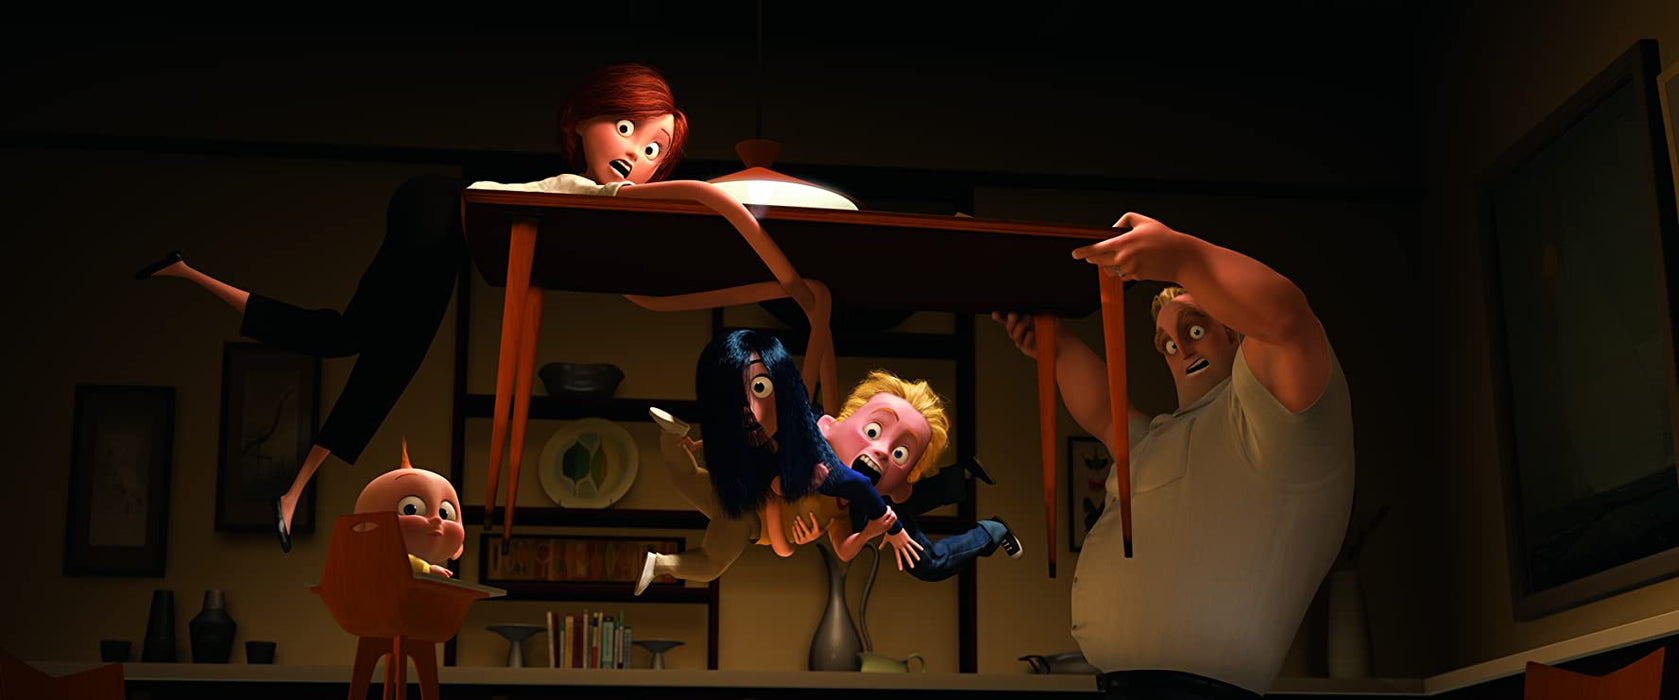 Disney Pixar's The Incredibles - Limited Edition SteelBook [Blu-ray + DVD + Digital]